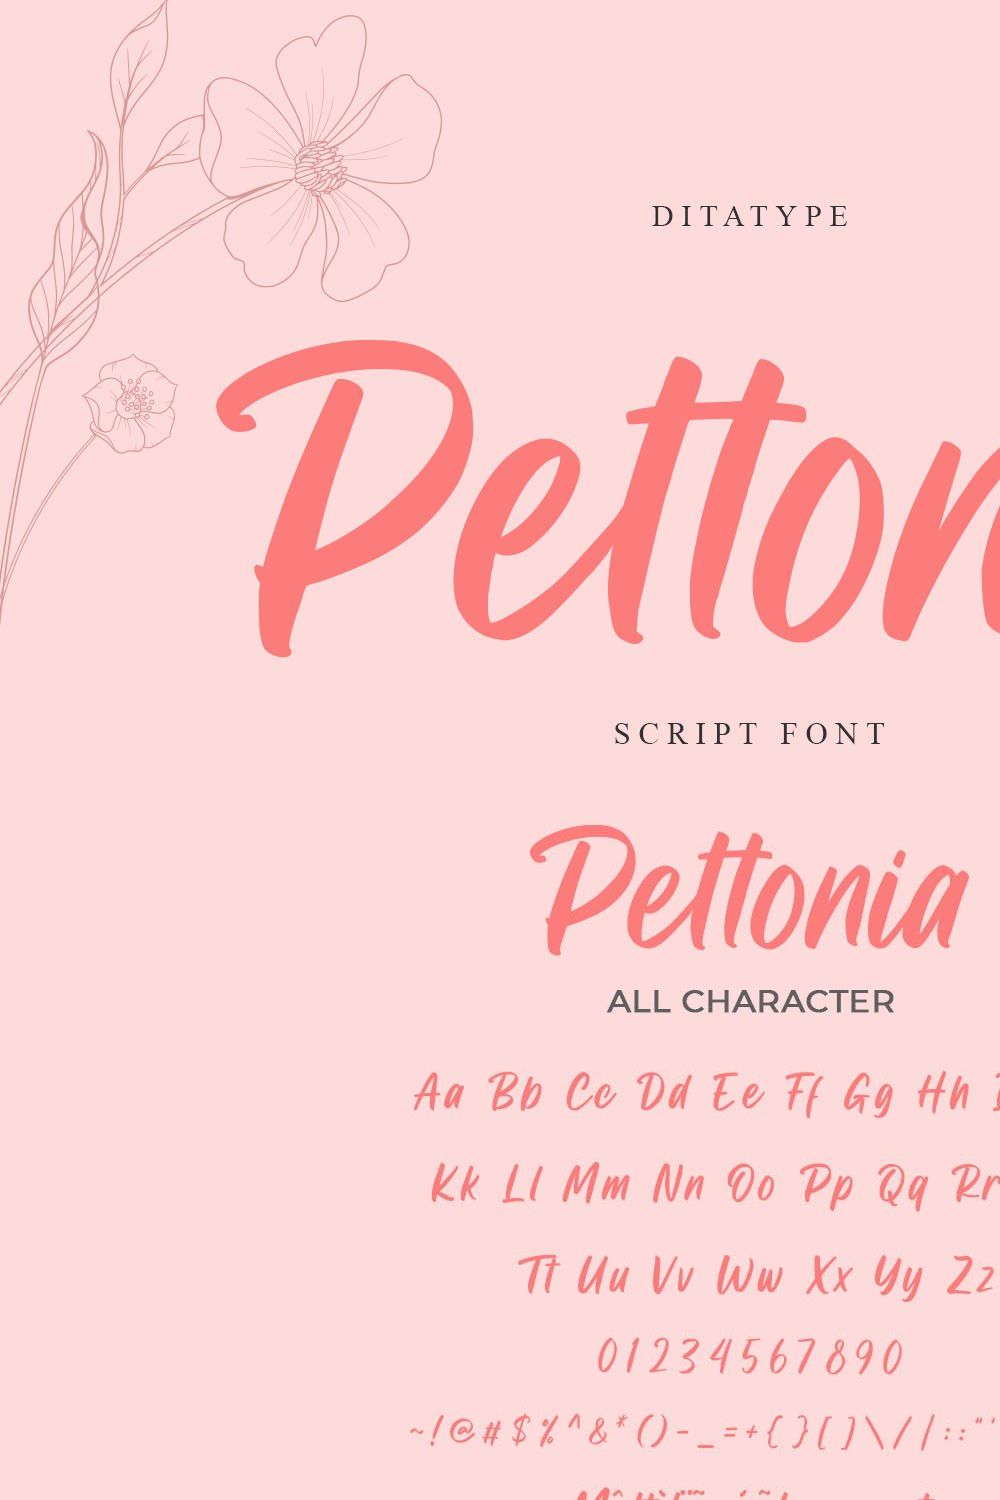 Pettonia pinterest preview image.